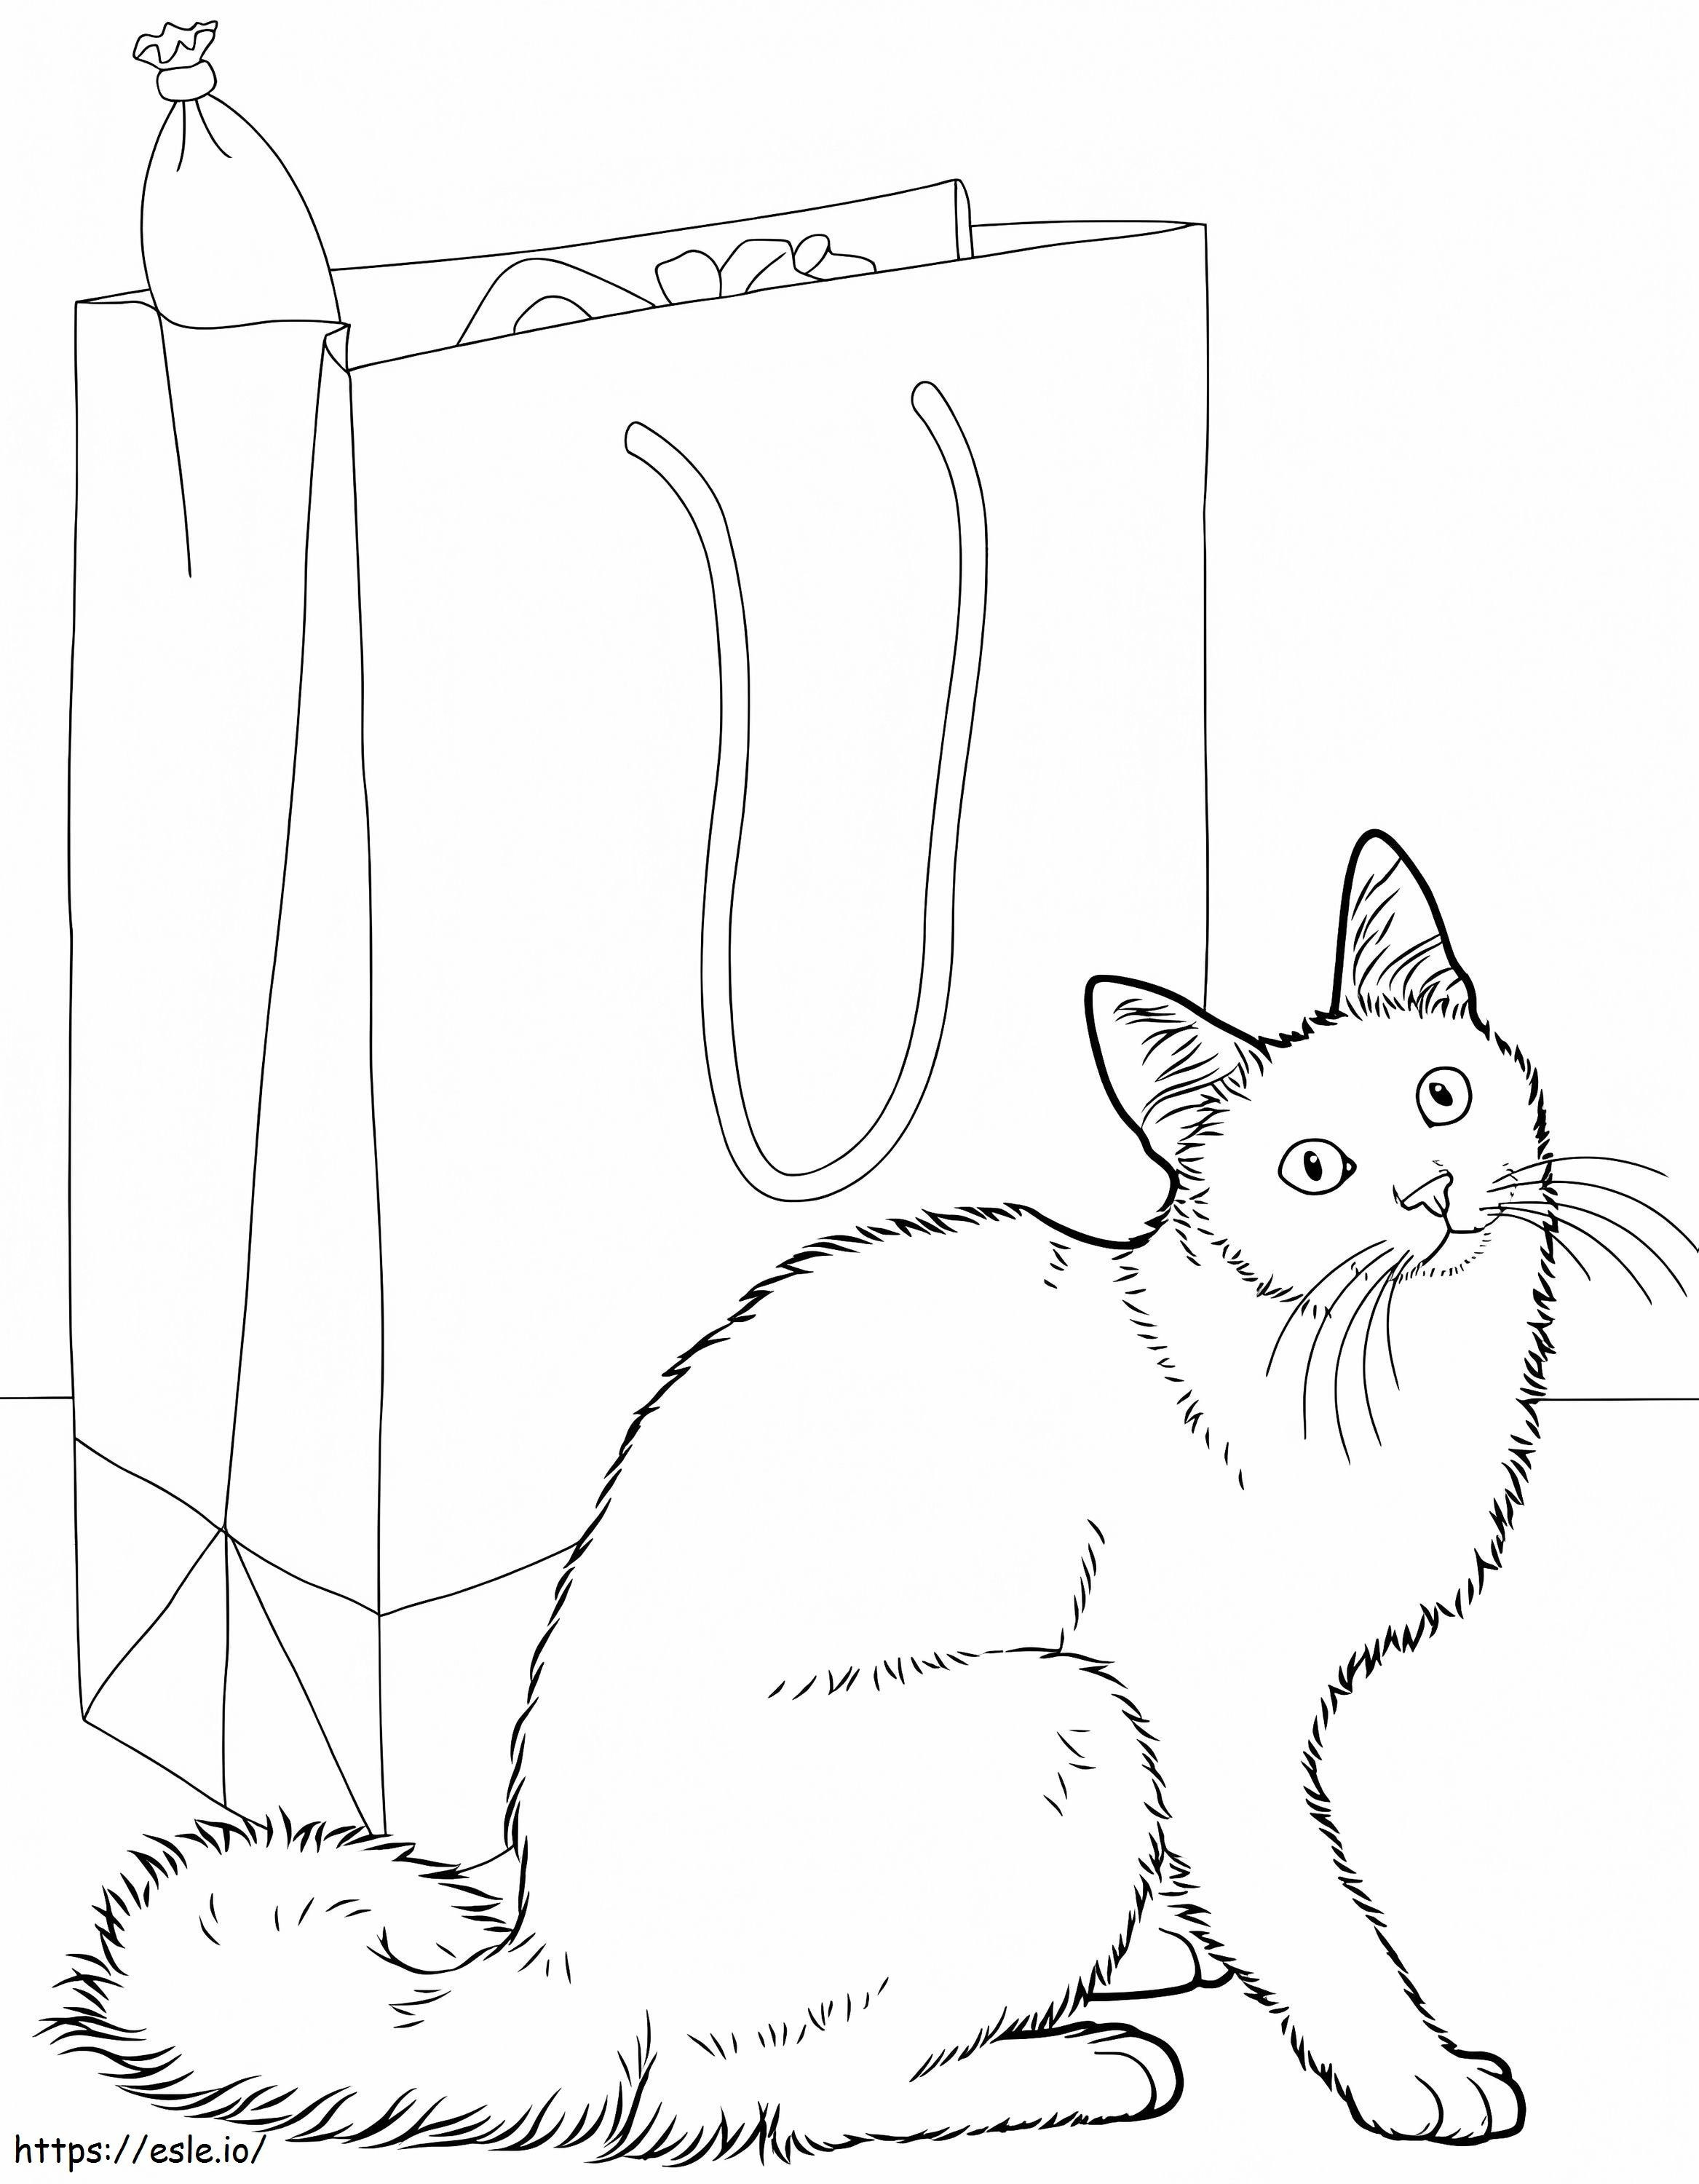 Angora Cat coloring page